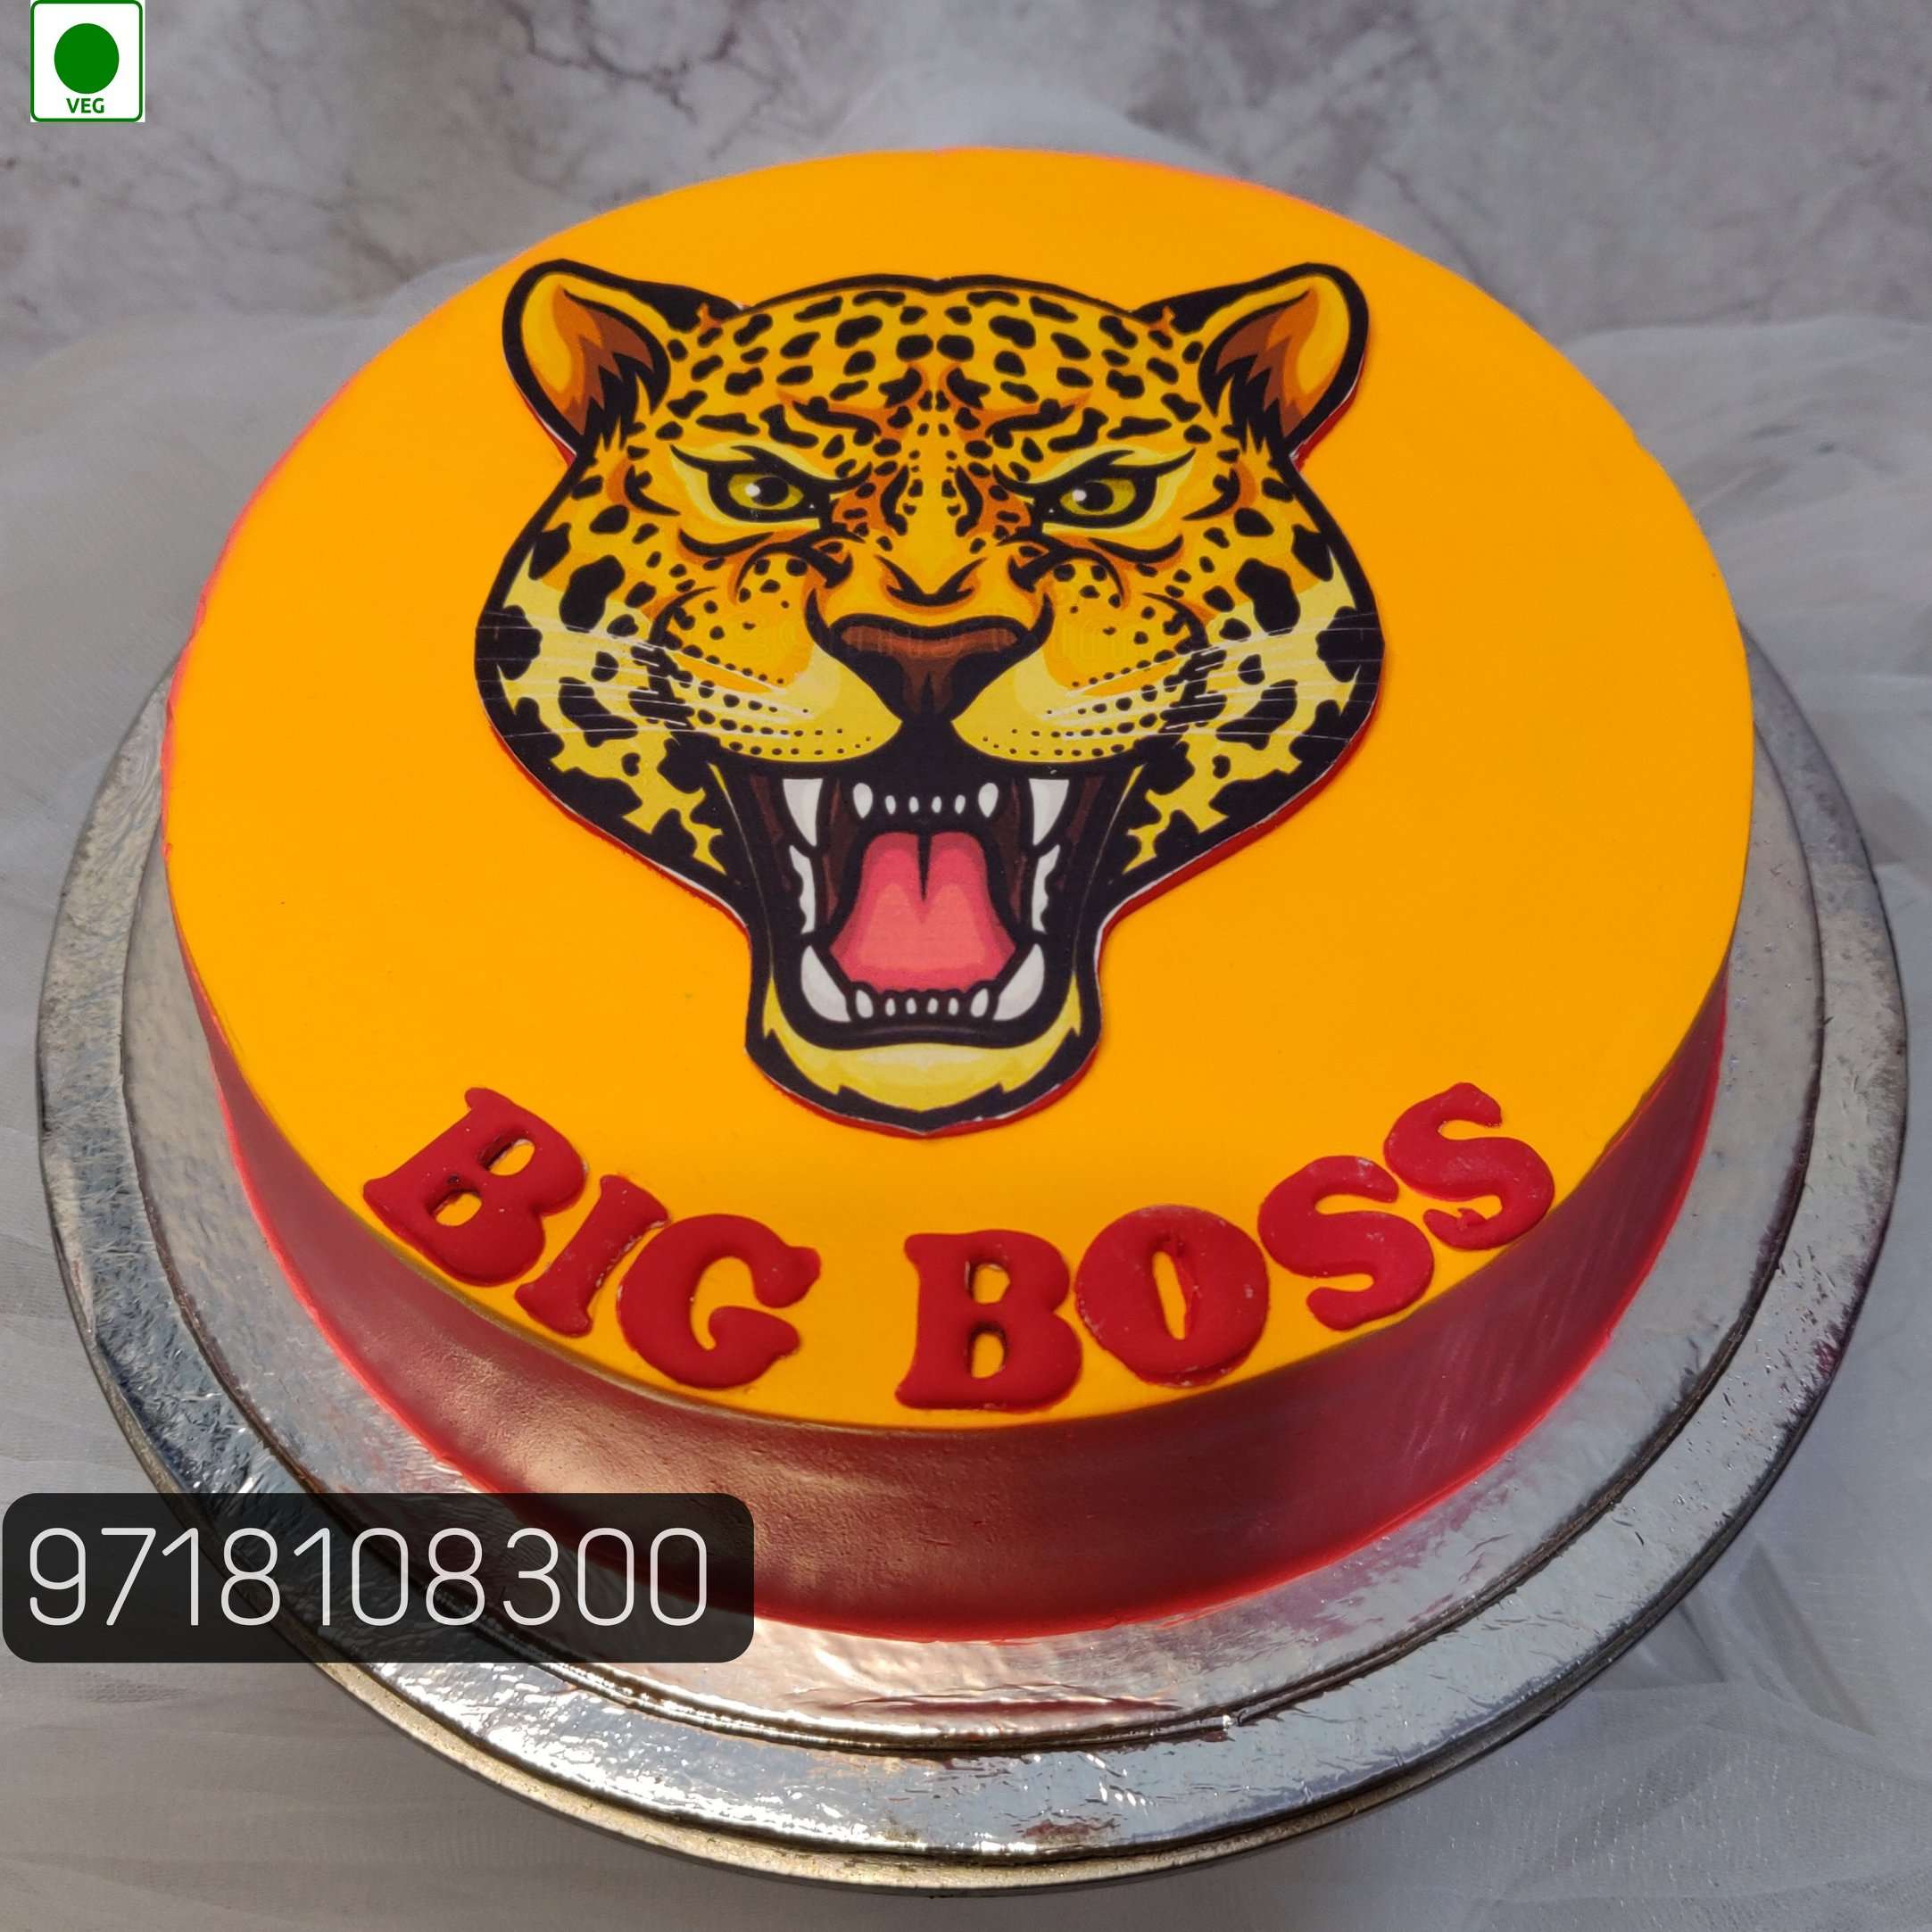 Bigg boss theme birthday cake with... - Smitha's Cake Lounge | Facebook